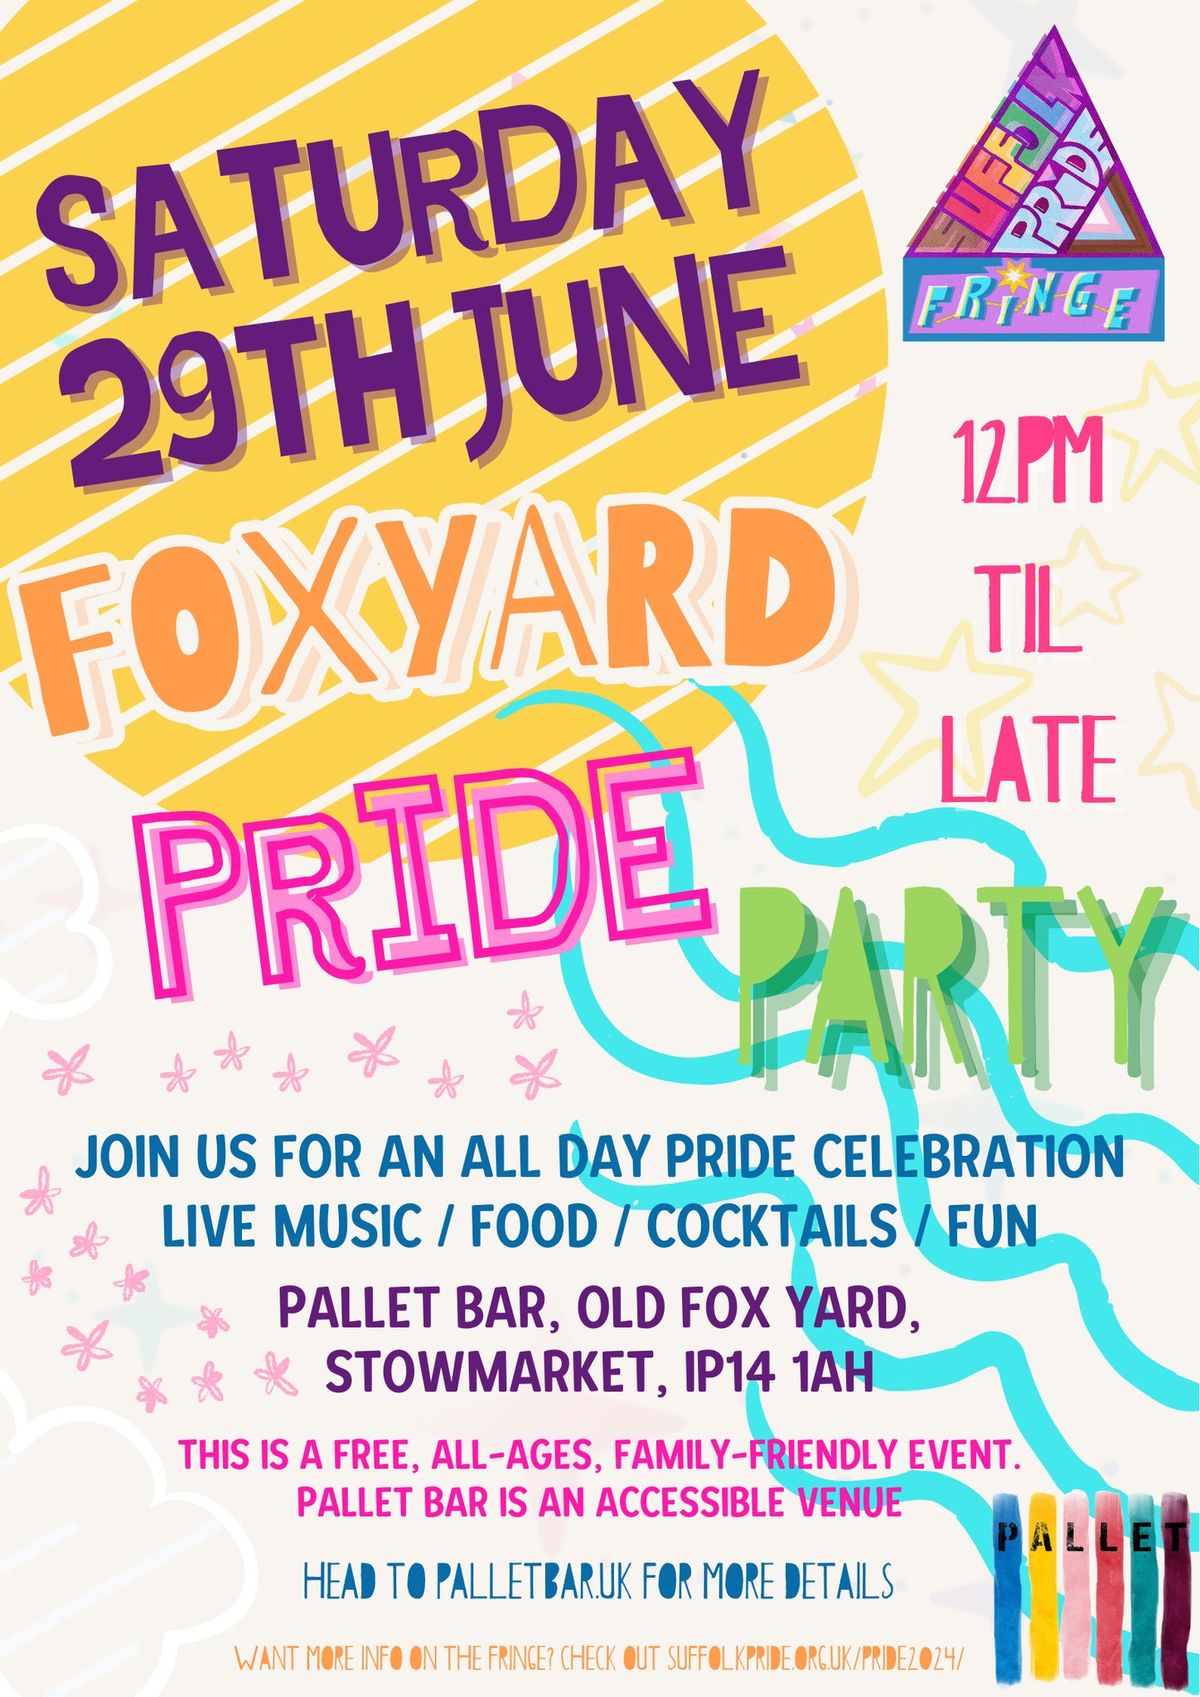 Foxyard Pride Party